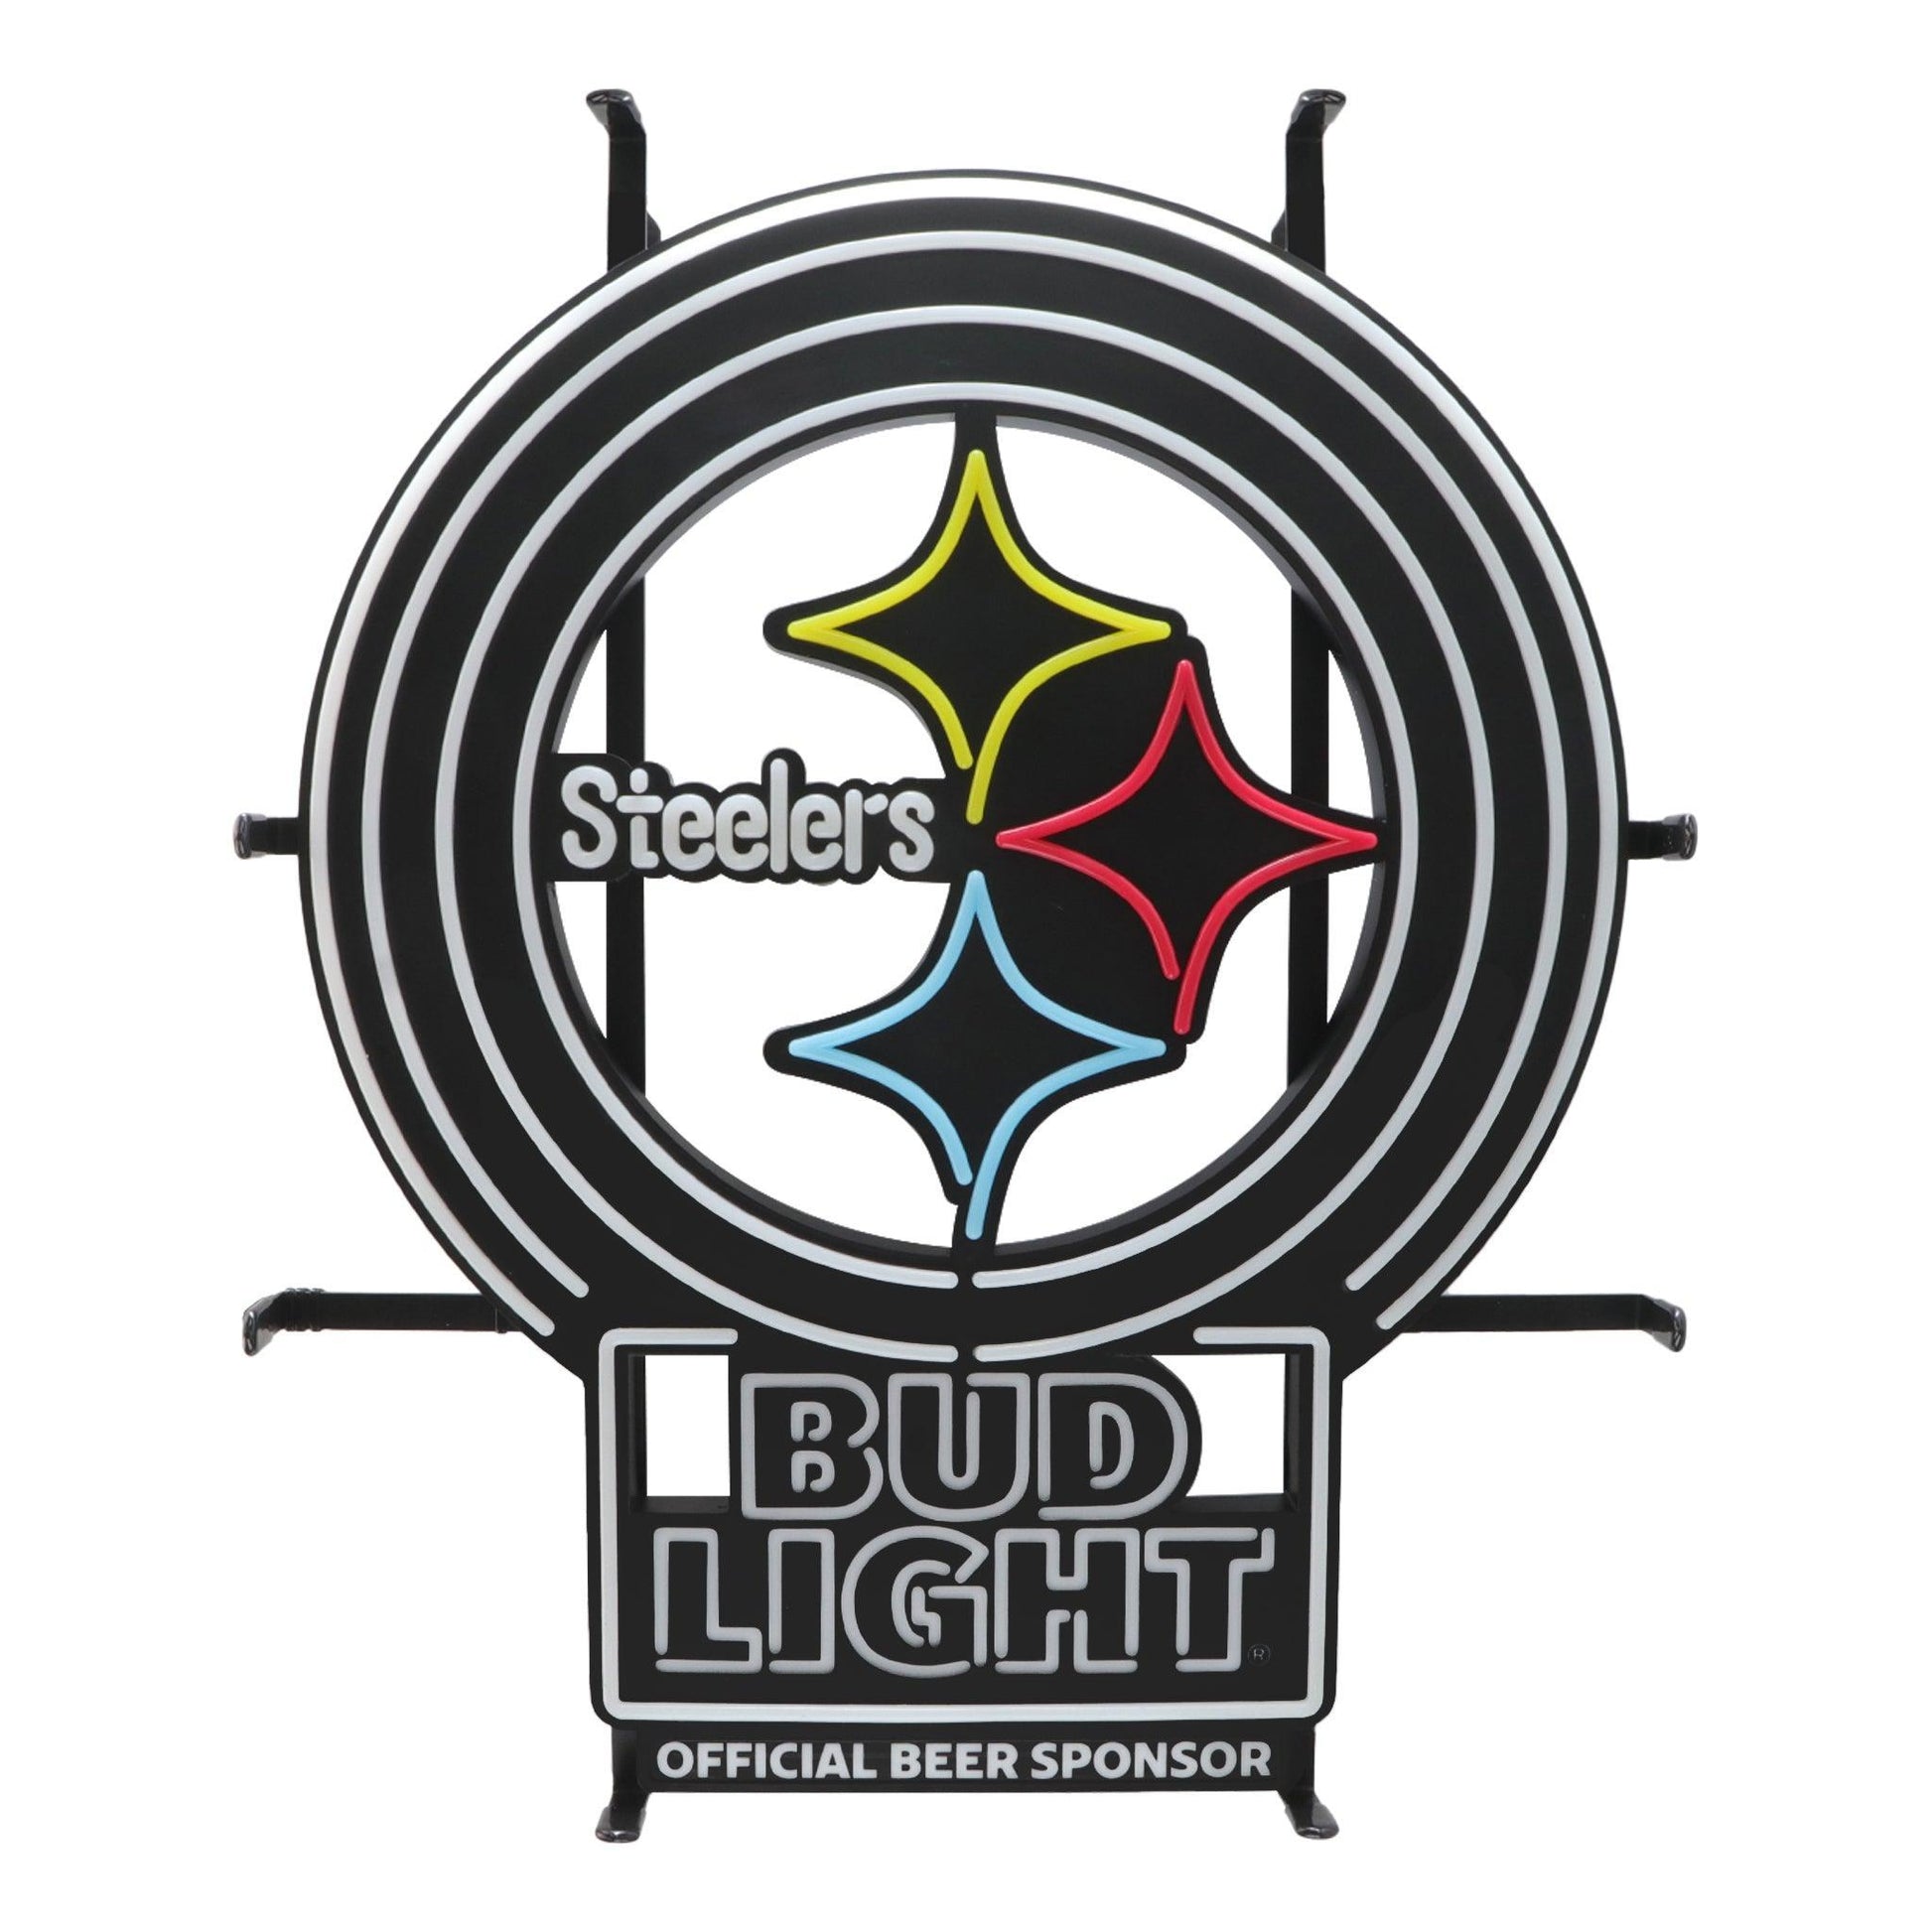 Steelers logo with bud Light logo under it